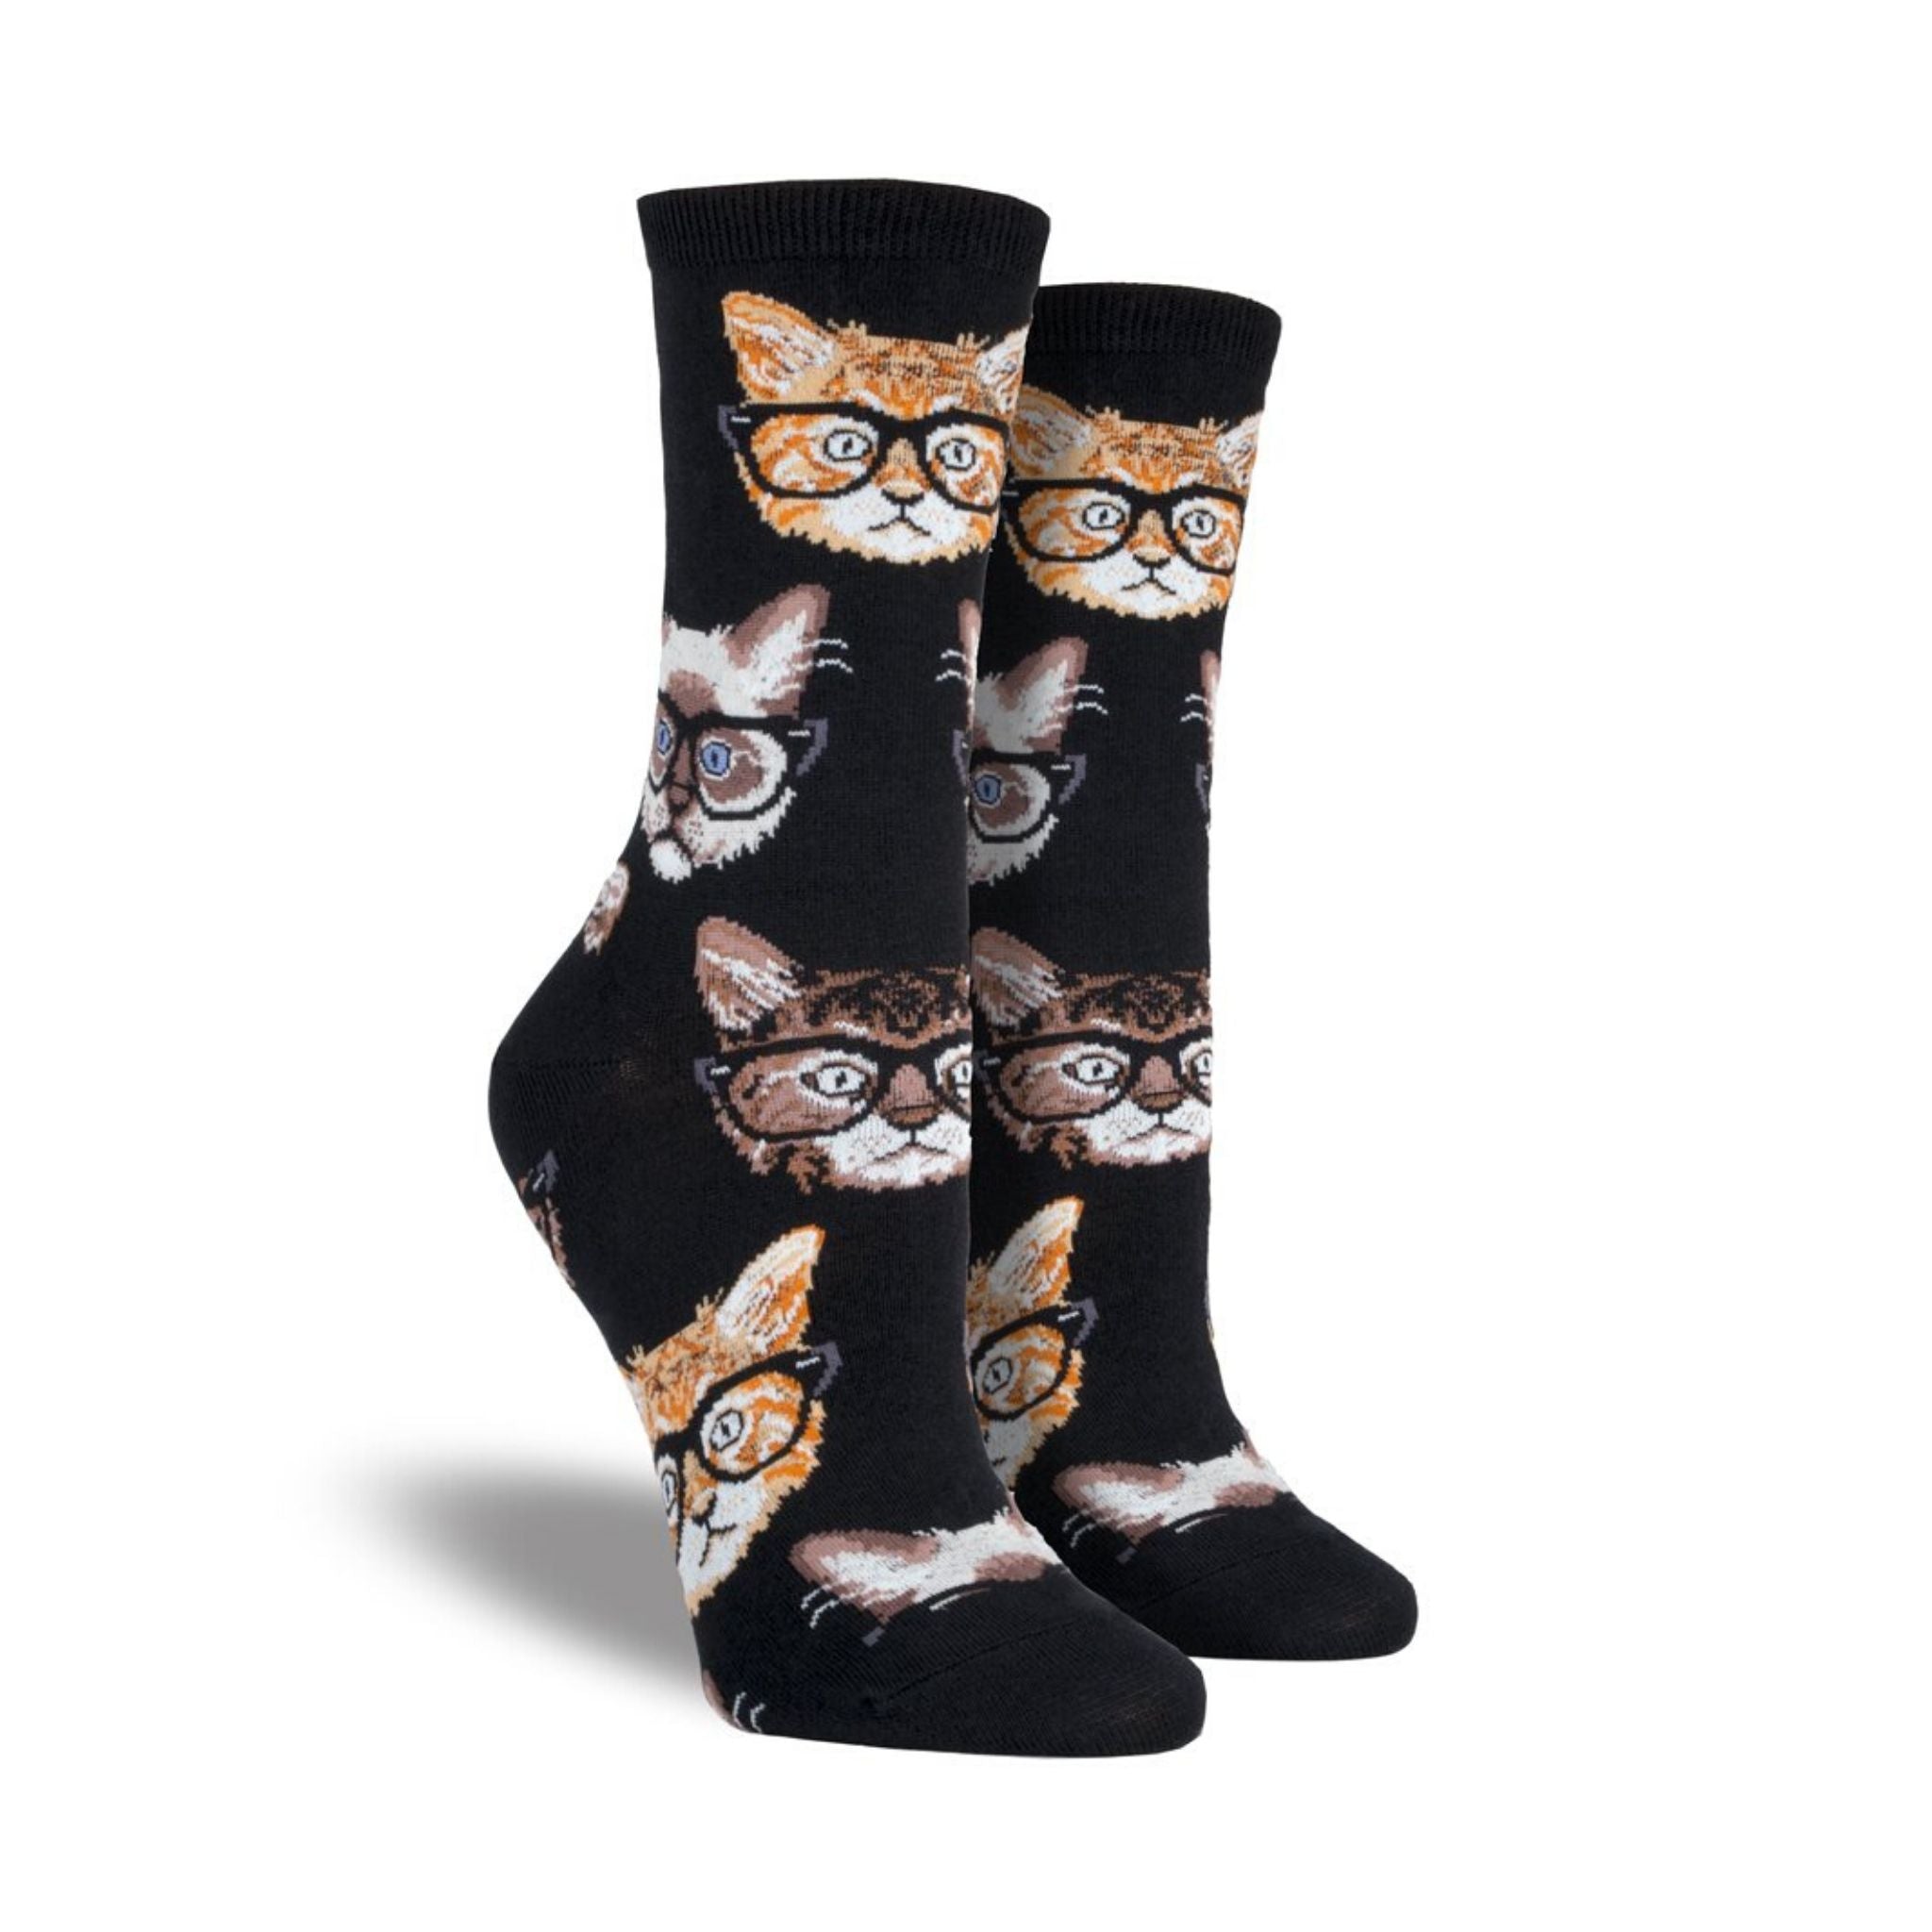 Black socks with hipster glasses wearing kitten faces